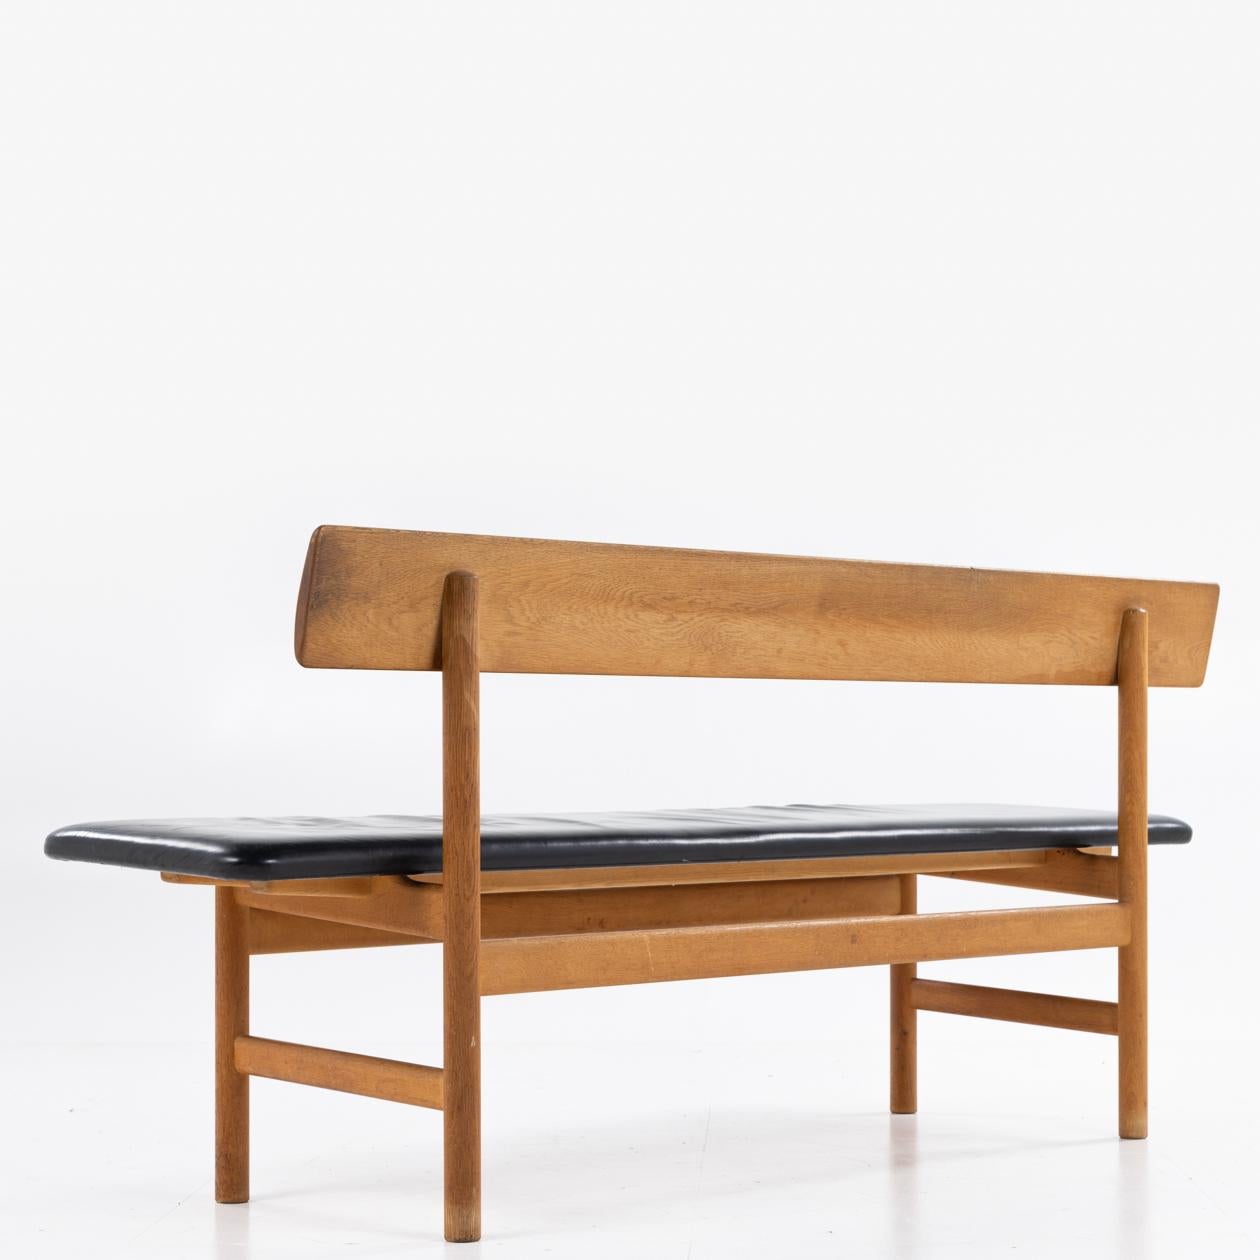 BM 3171 bench in patinated oak and black leather. Børge Mogensen / Fredericia Furniture